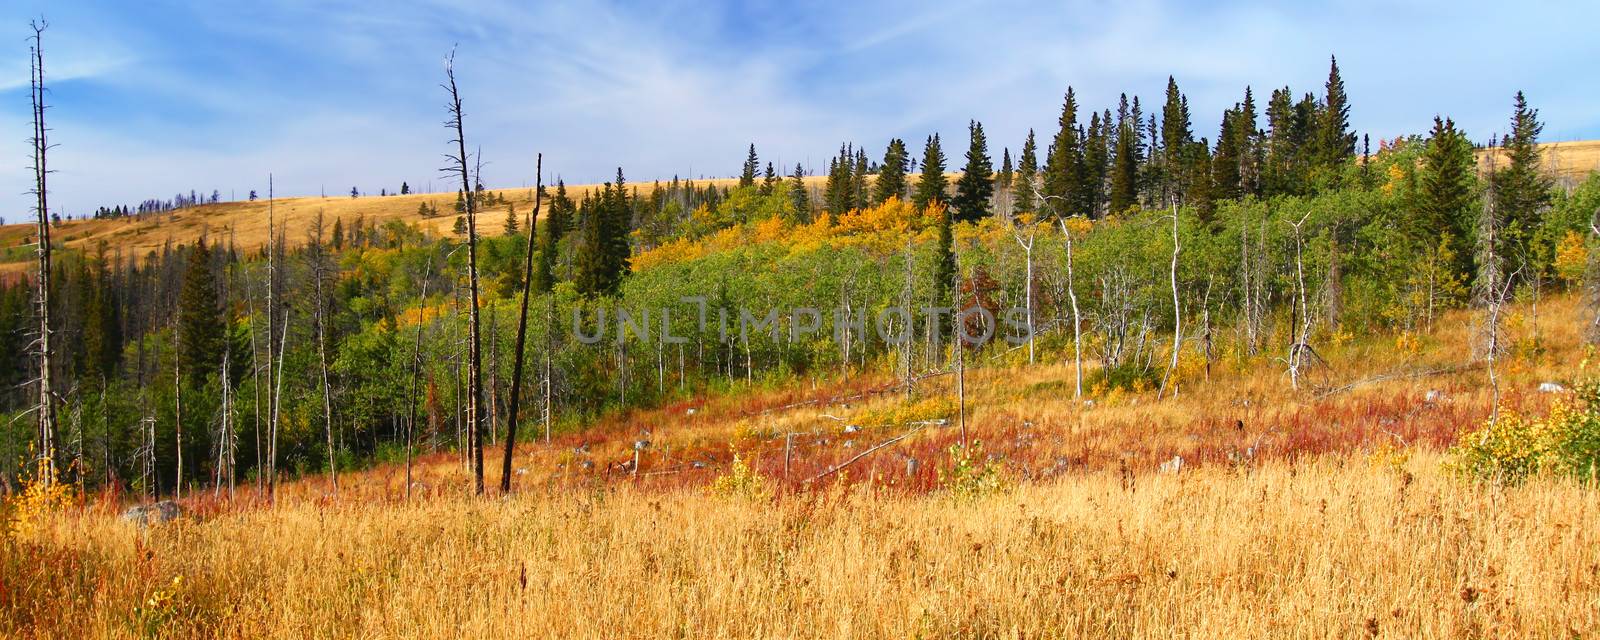 Montana Autumn Scenery by Wirepec